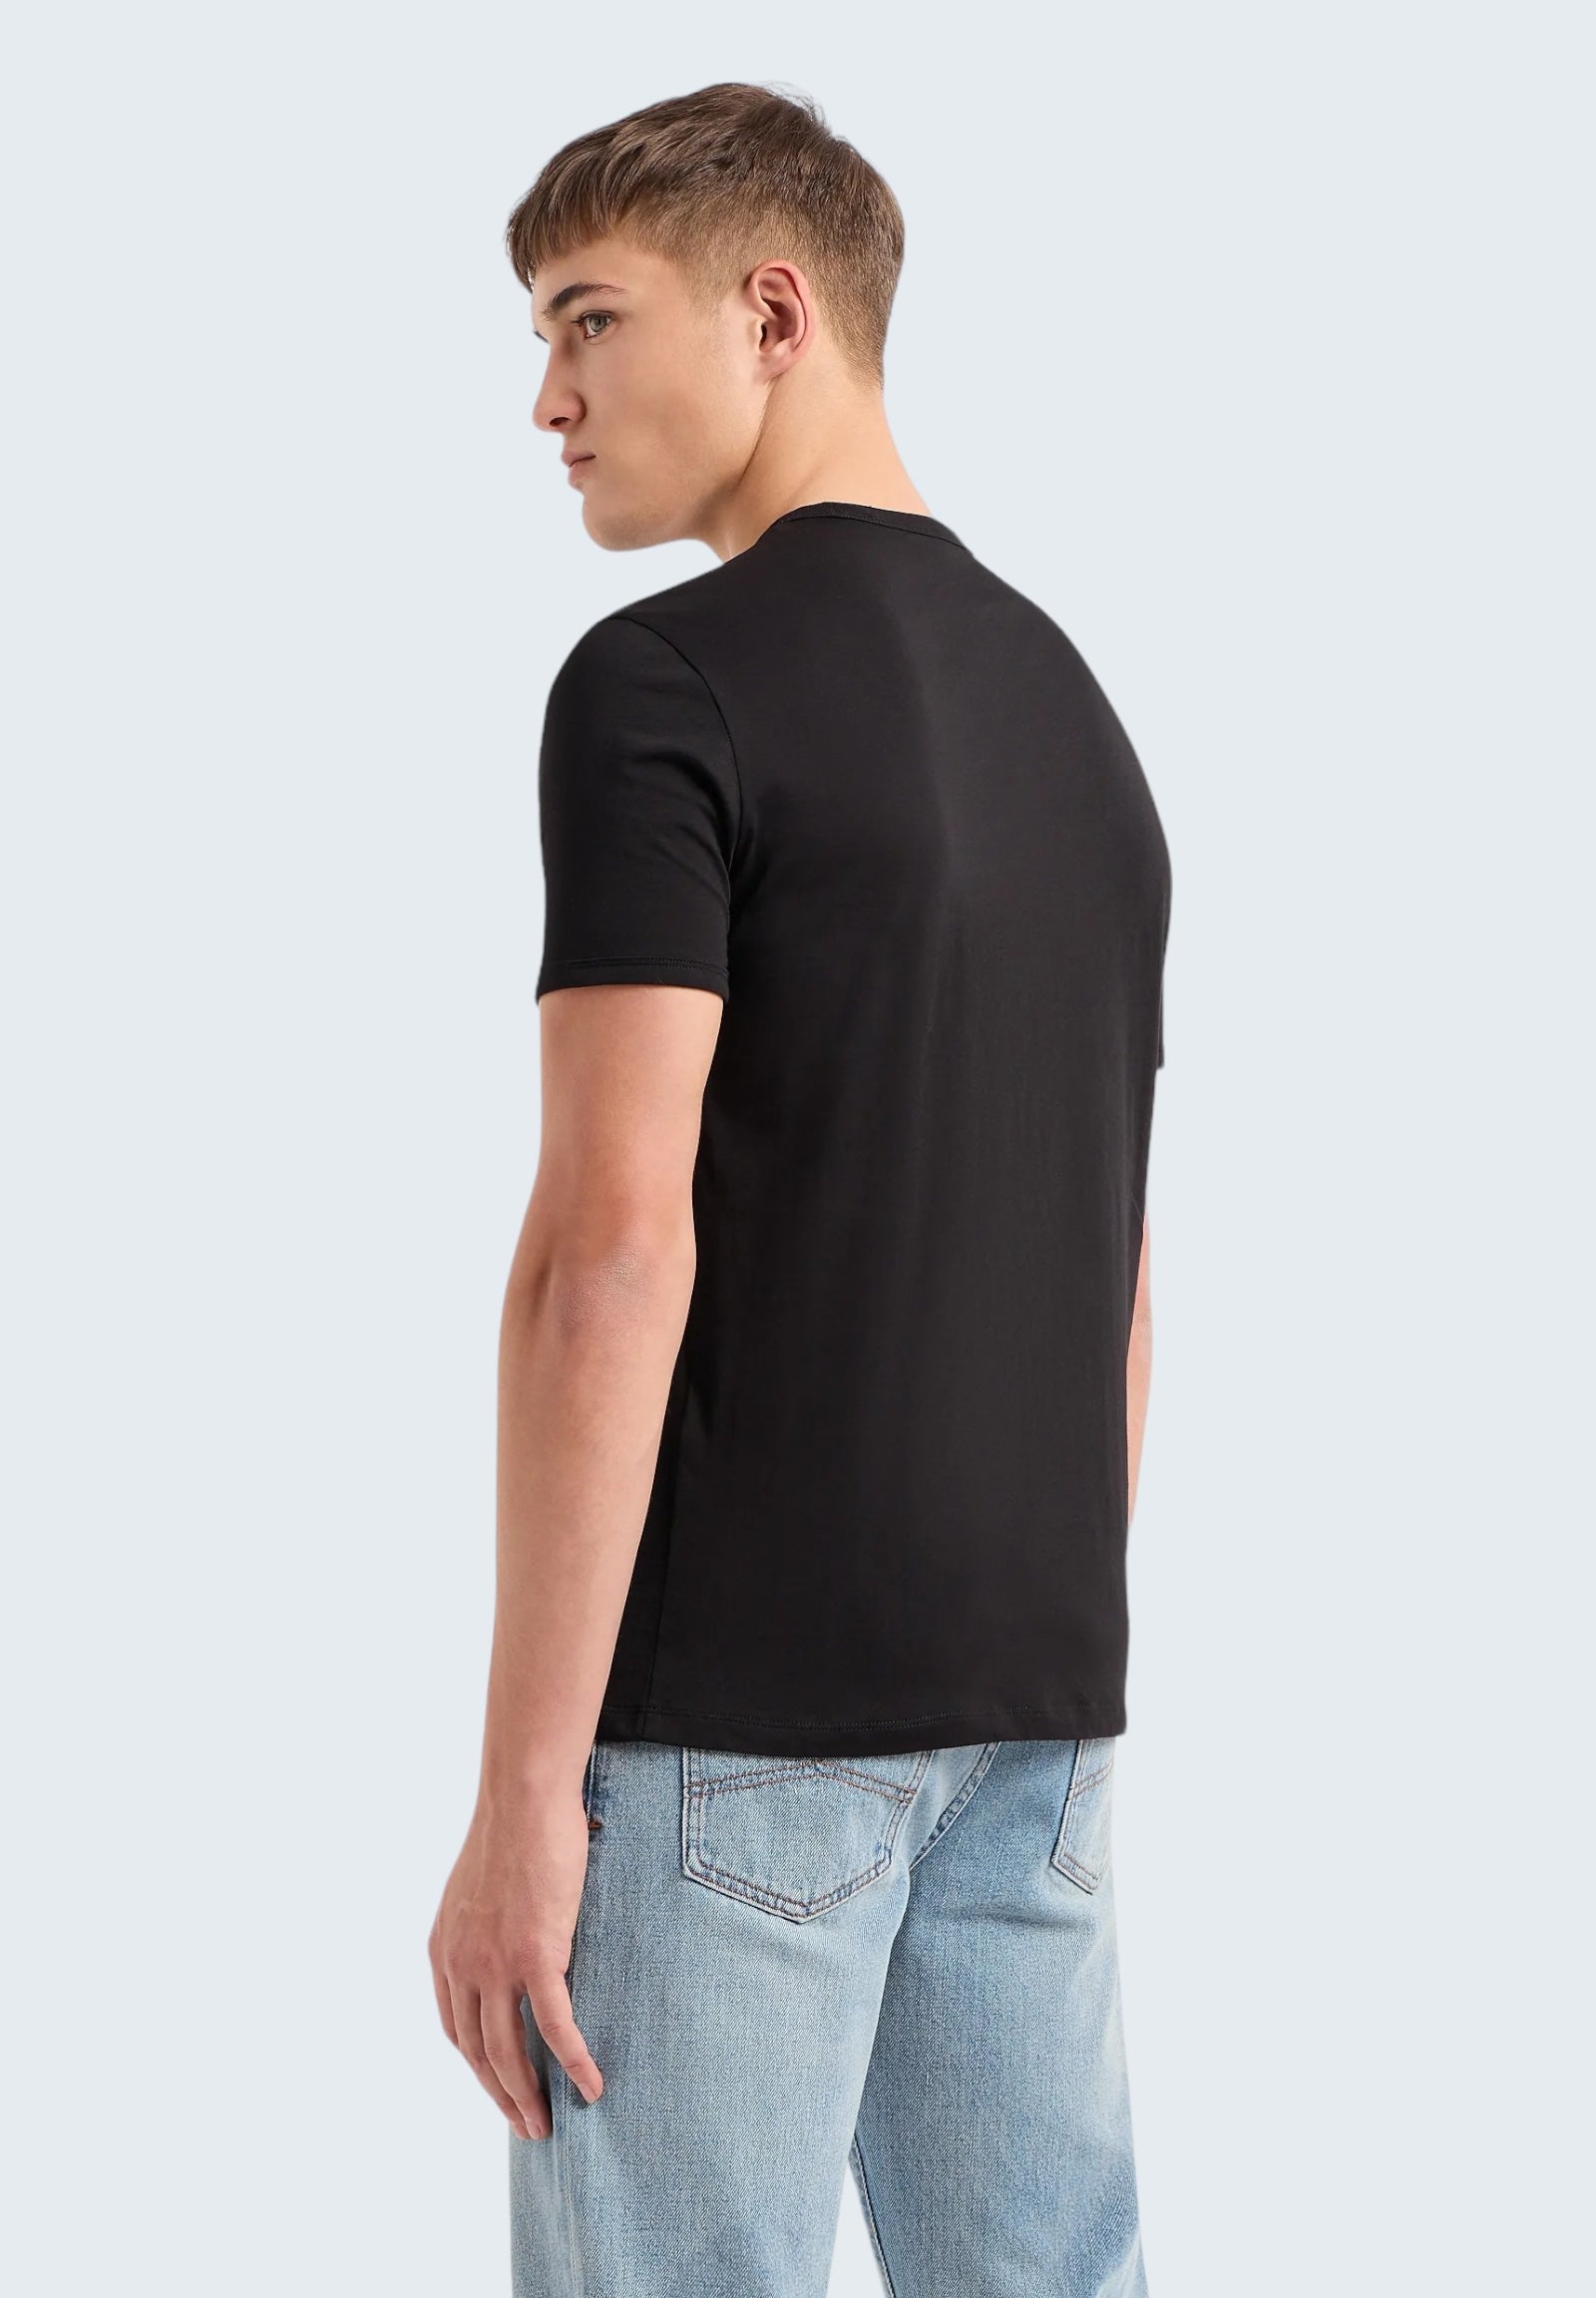 Armani Exchange T-Shirt* 8nzt76 Black